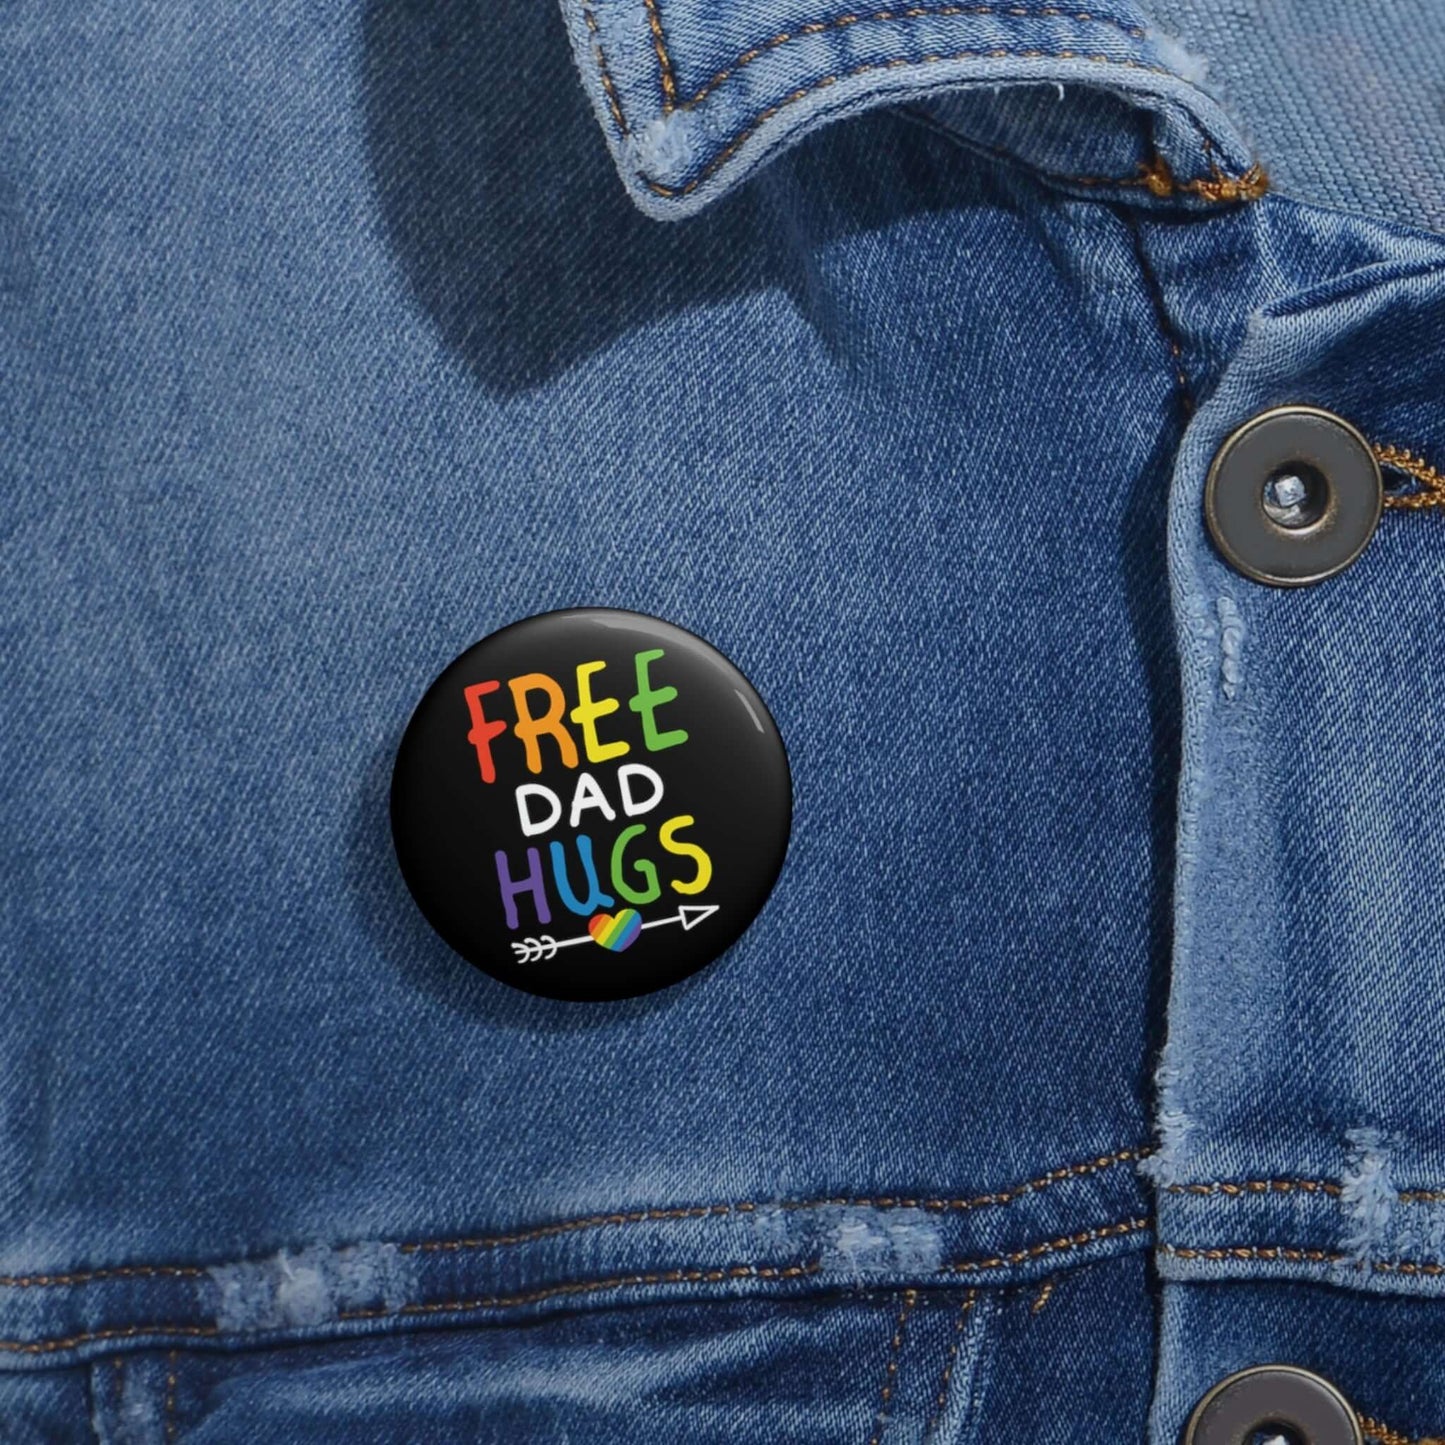 Free Dad hugs rainbow pride LGBTQA ally support pinback button.